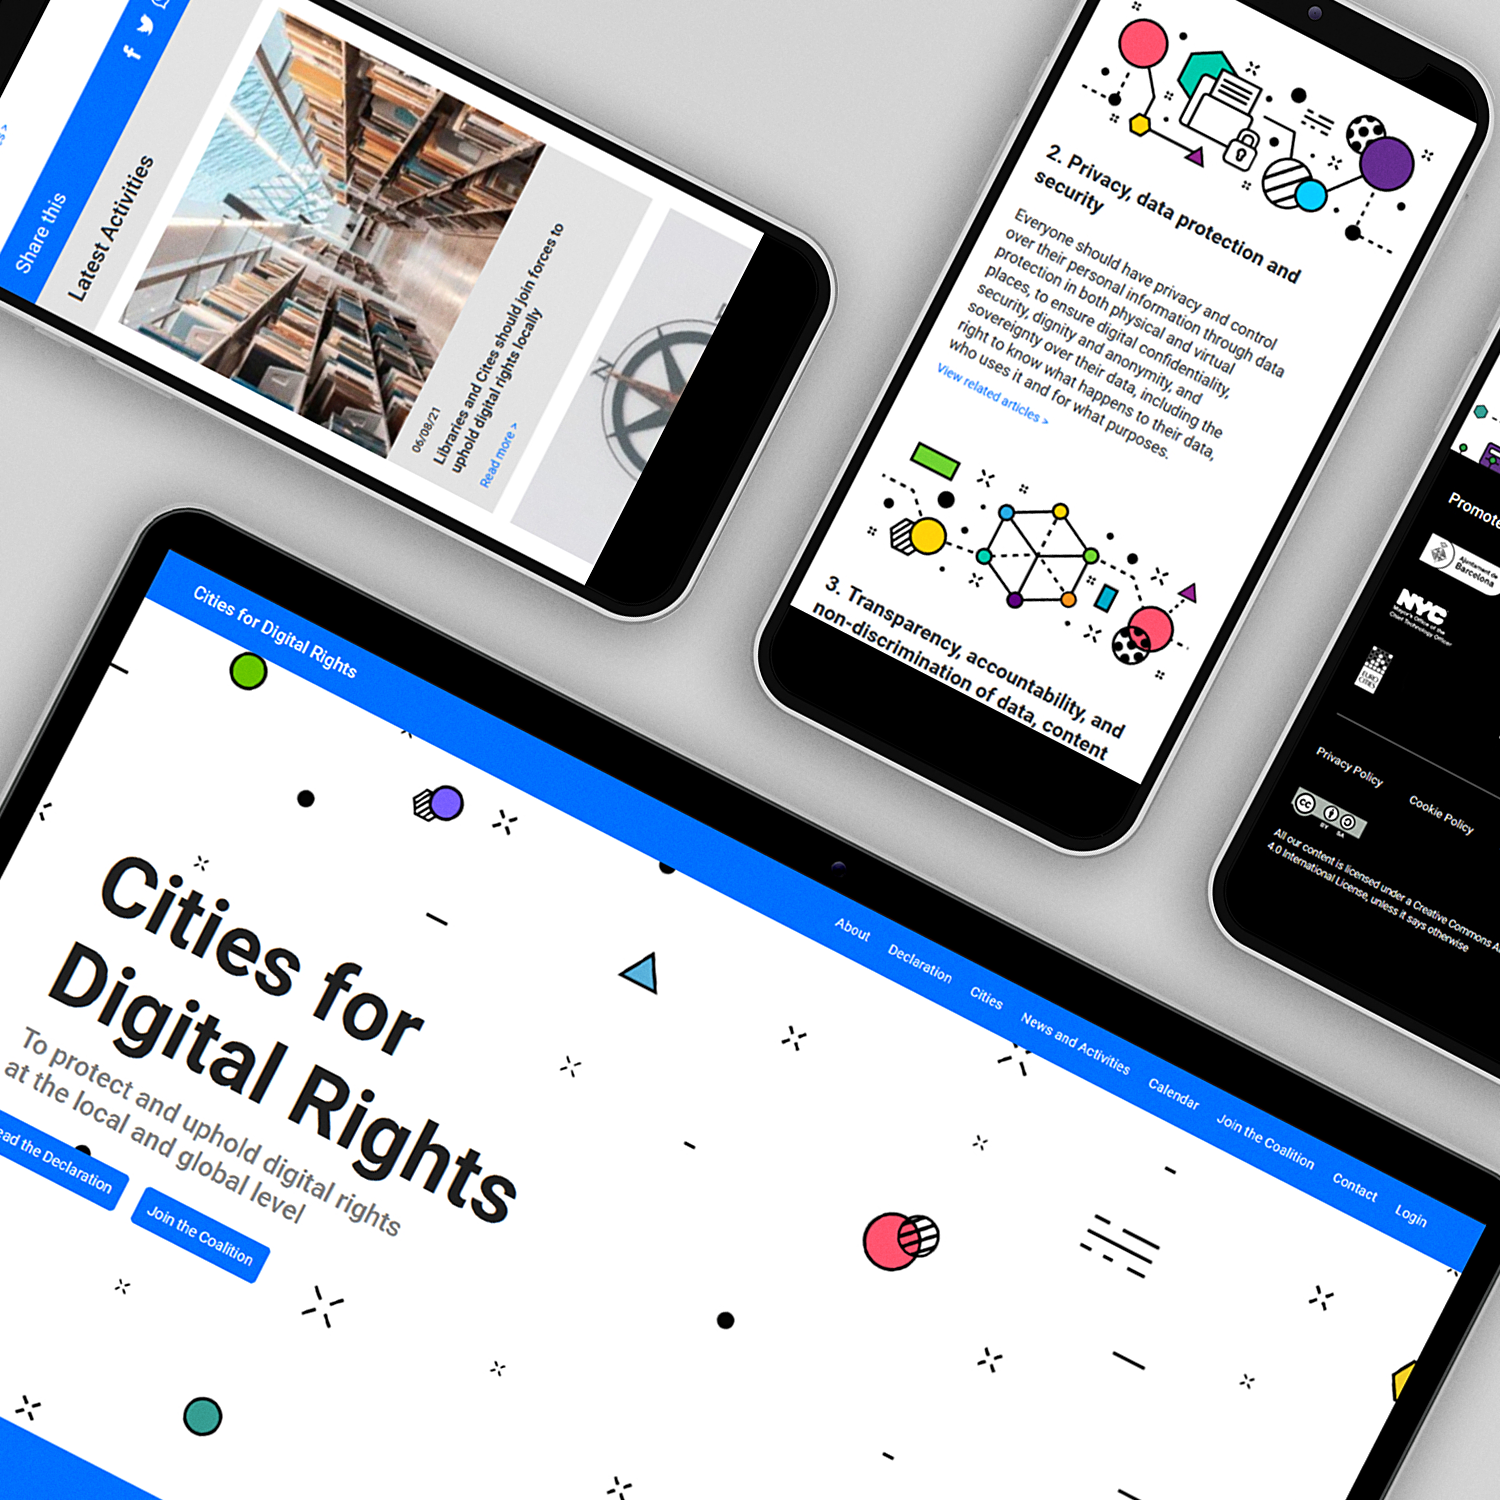 Miniatura del proyecto Cities For Digital Rights 2020